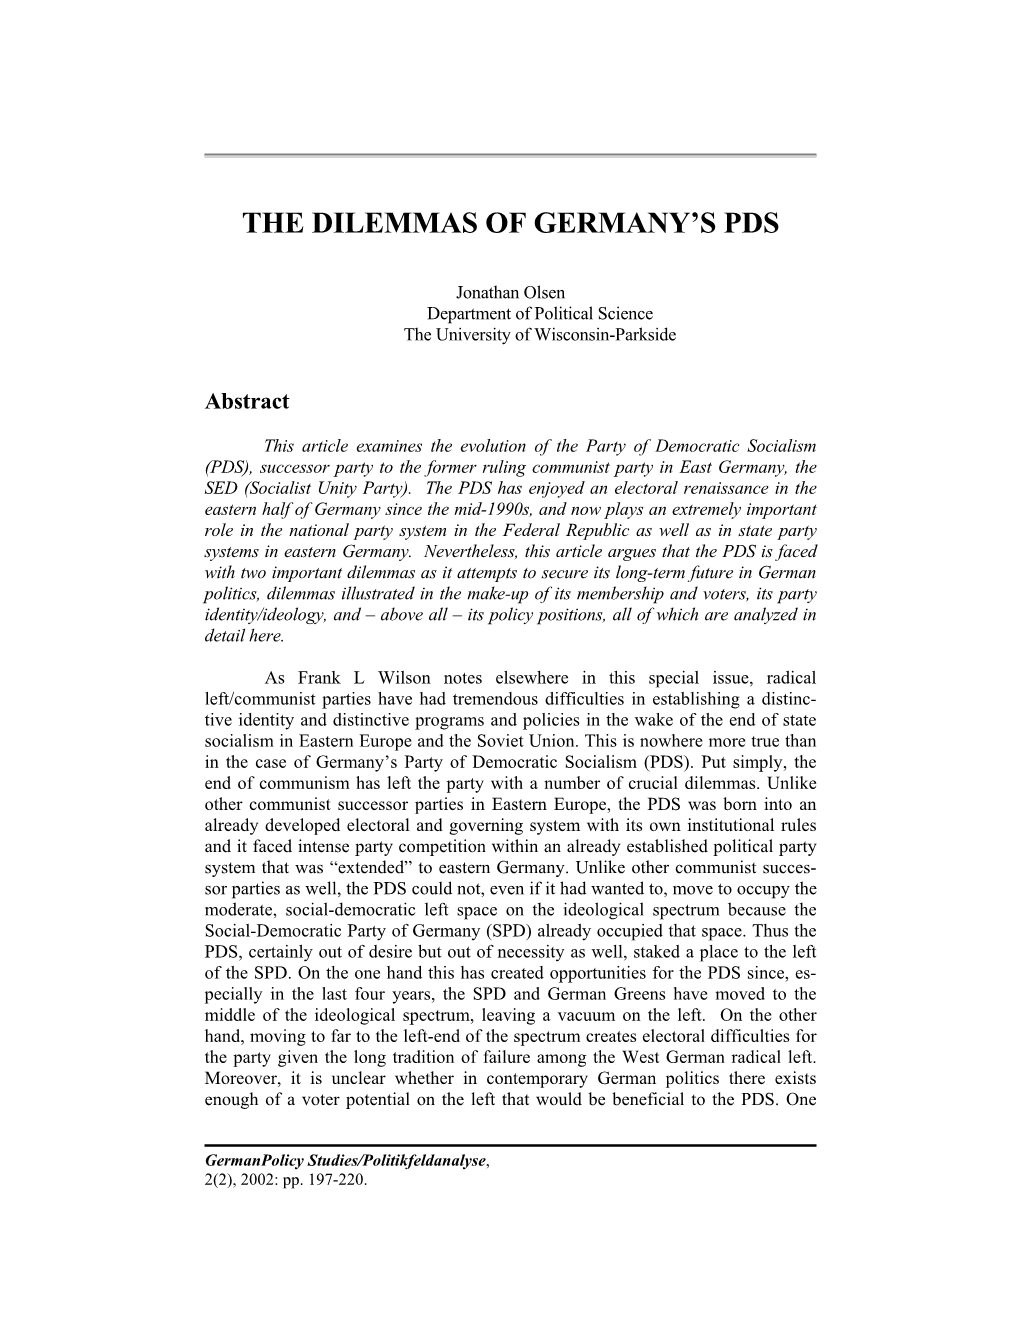 The Dilemmas of Germany's